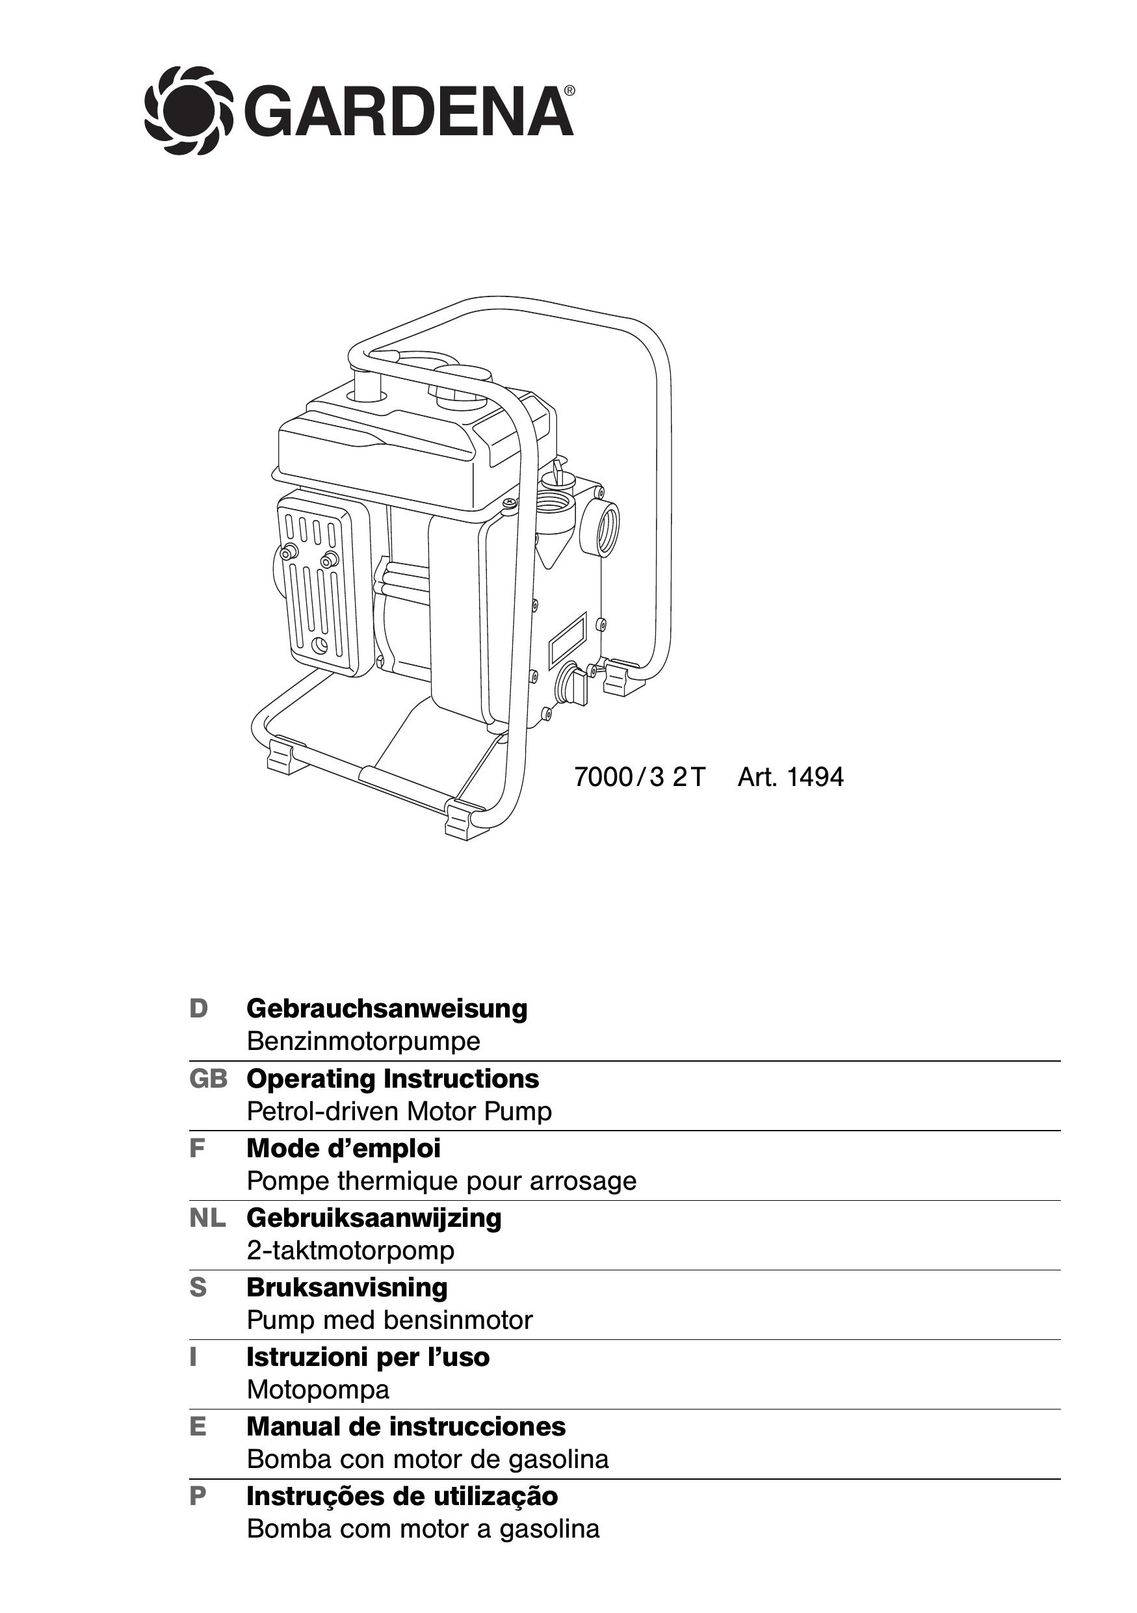 Gardena 7000/3 2 T art. 1494 Heat Pump User Manual